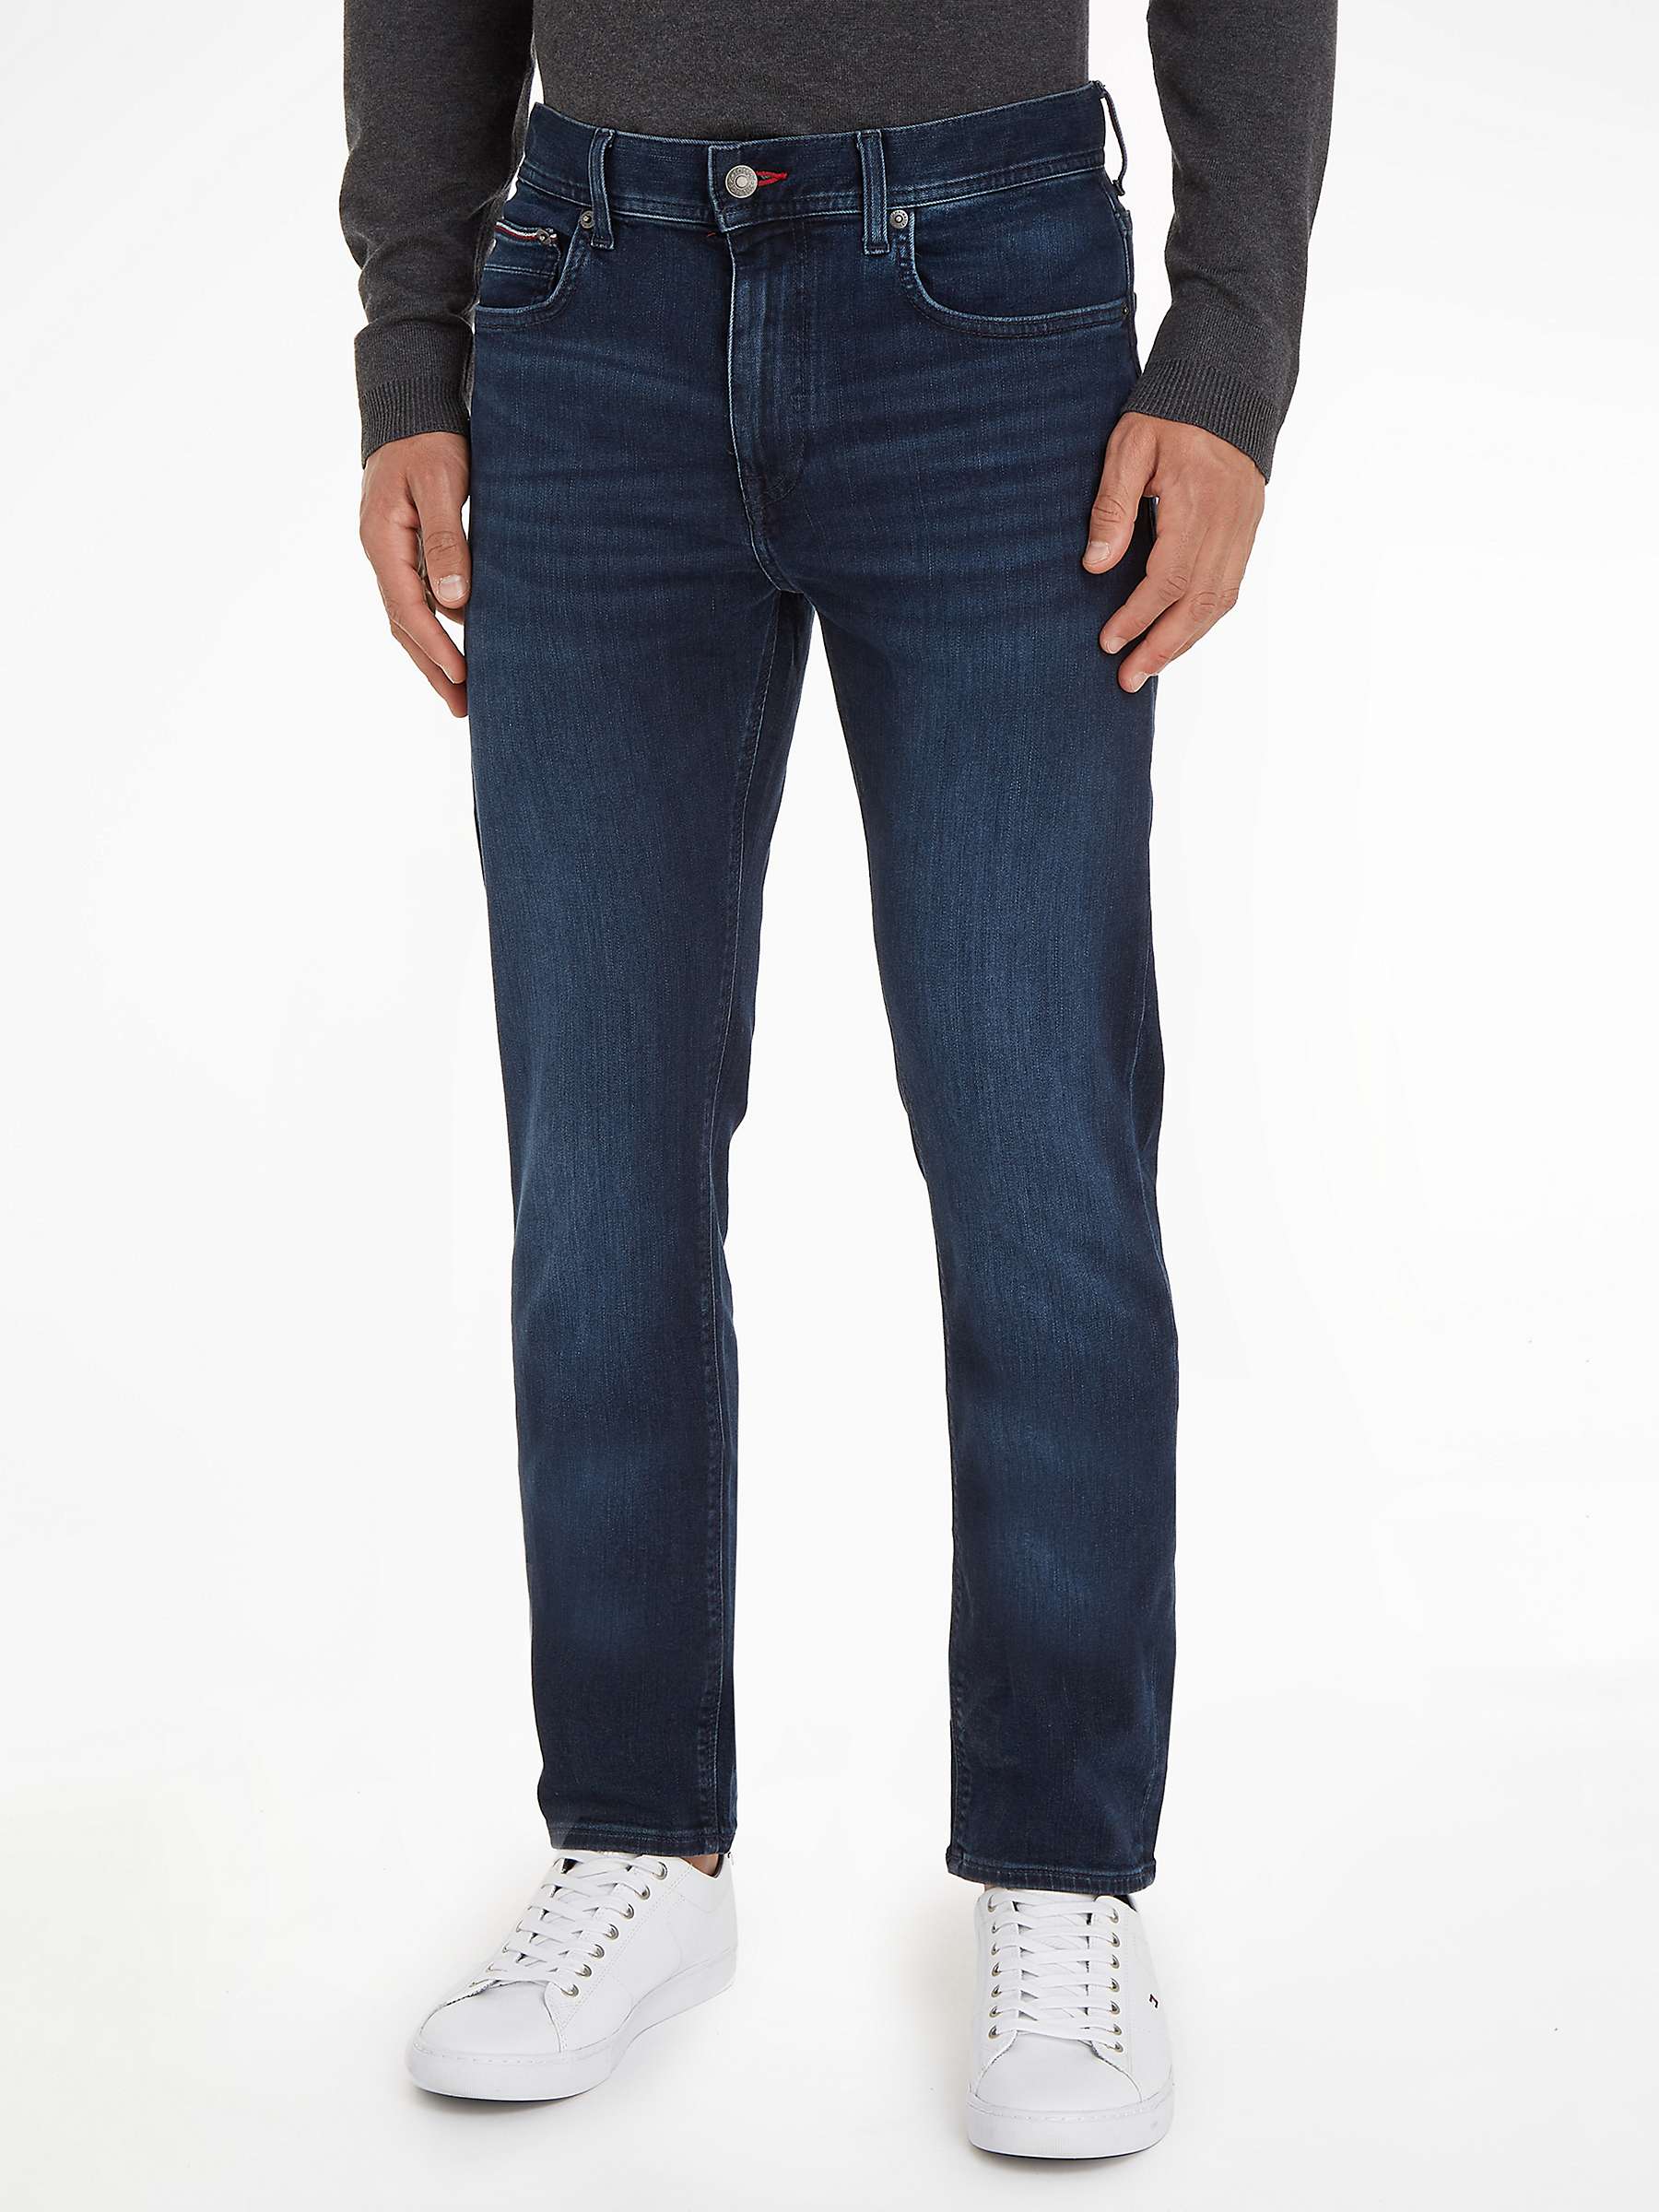 Buy Tommy Hilfiger Bleecker Slim Faded Jeans, Iowa Blue/Black Online at johnlewis.com